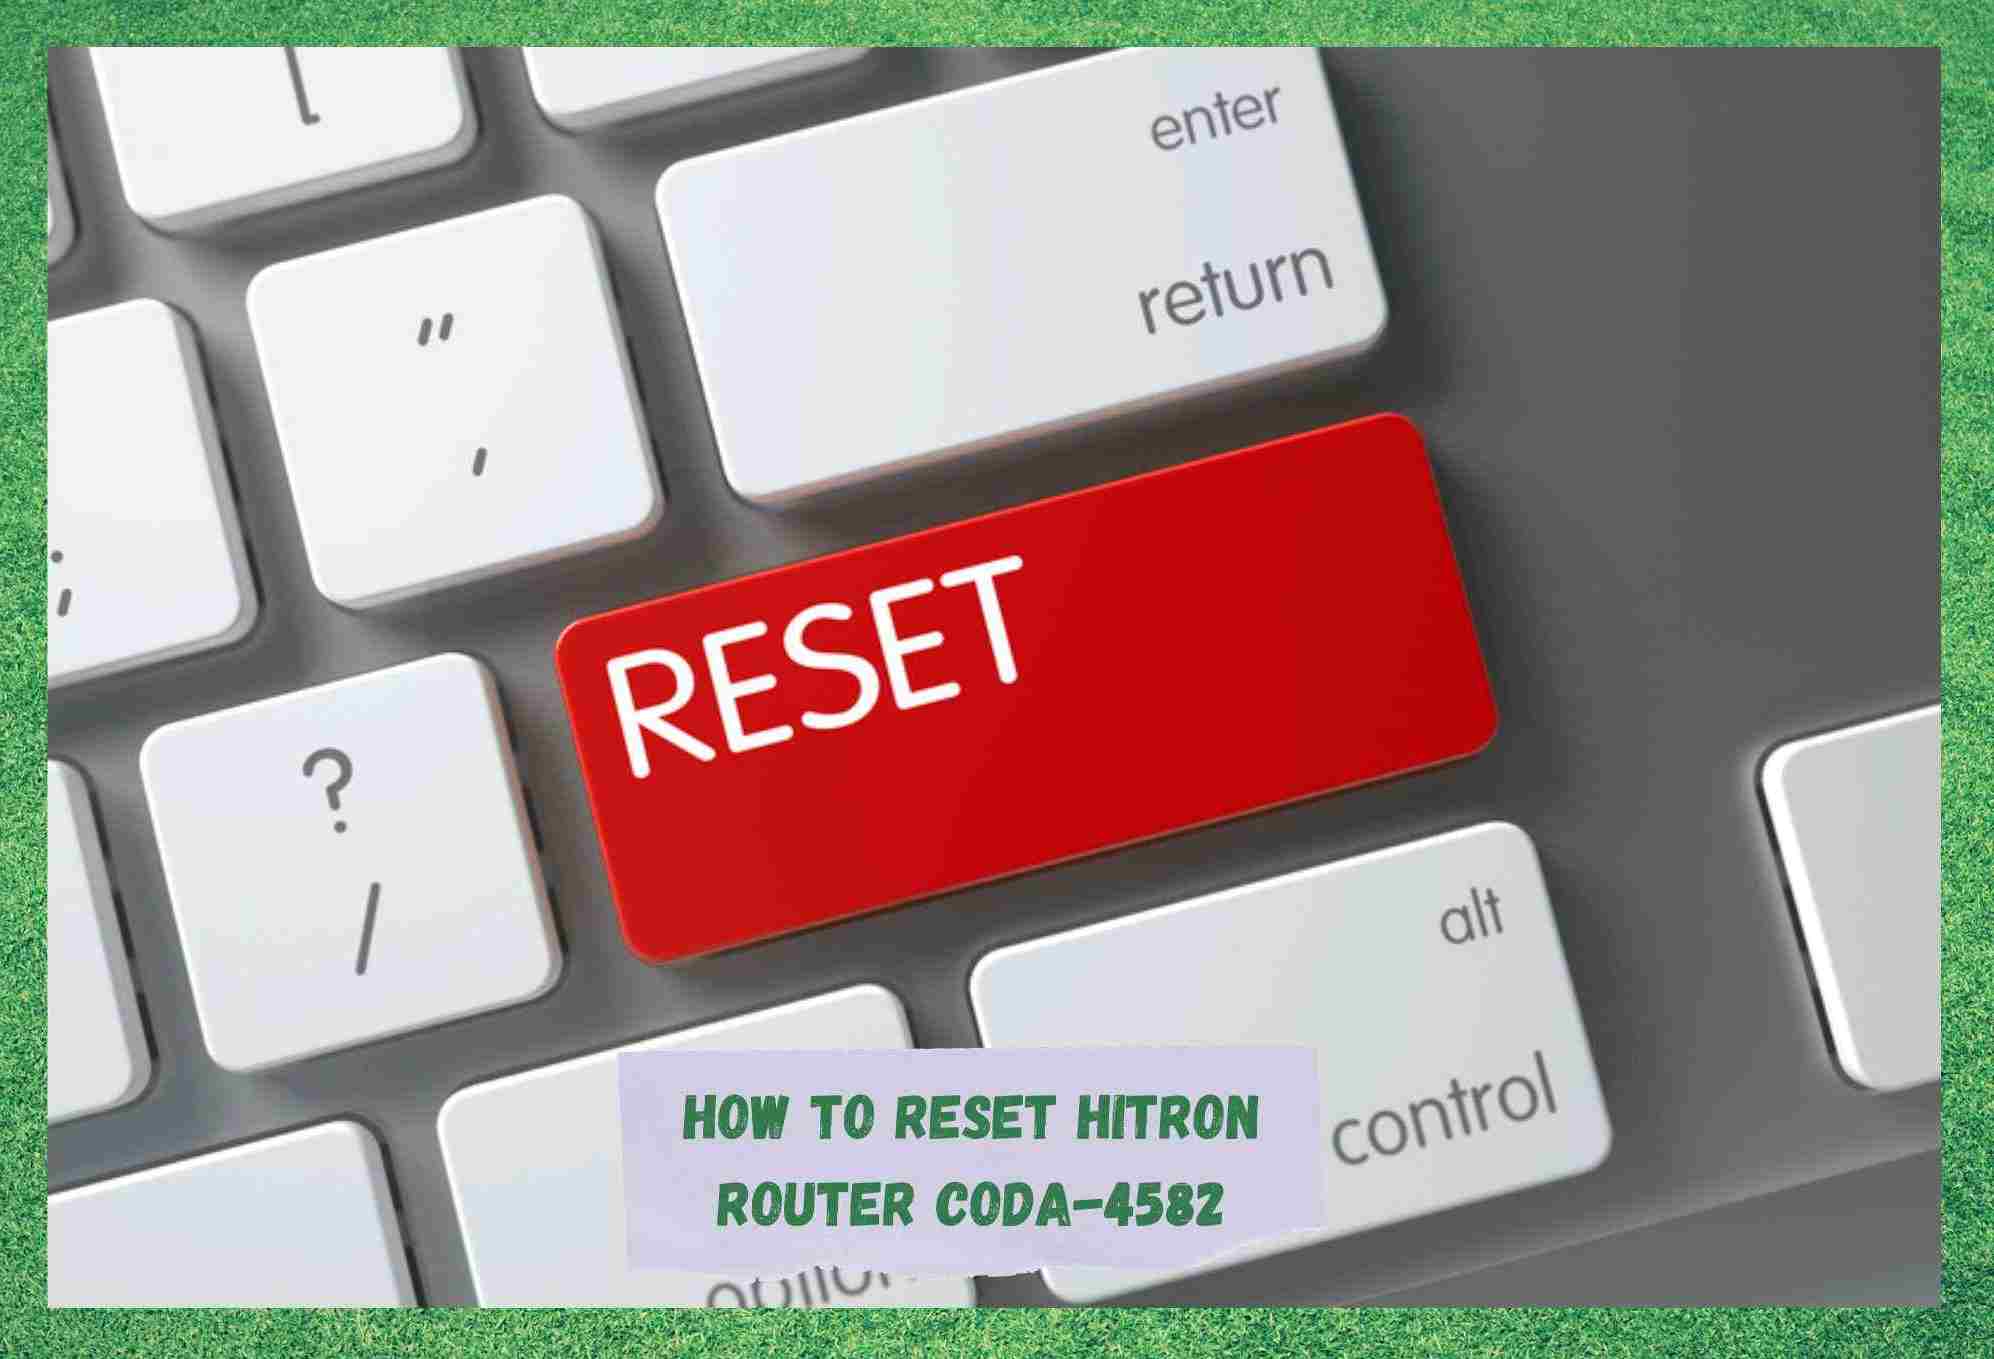 how to reset hitron router coda-4582how to reset hitron router coda-4582